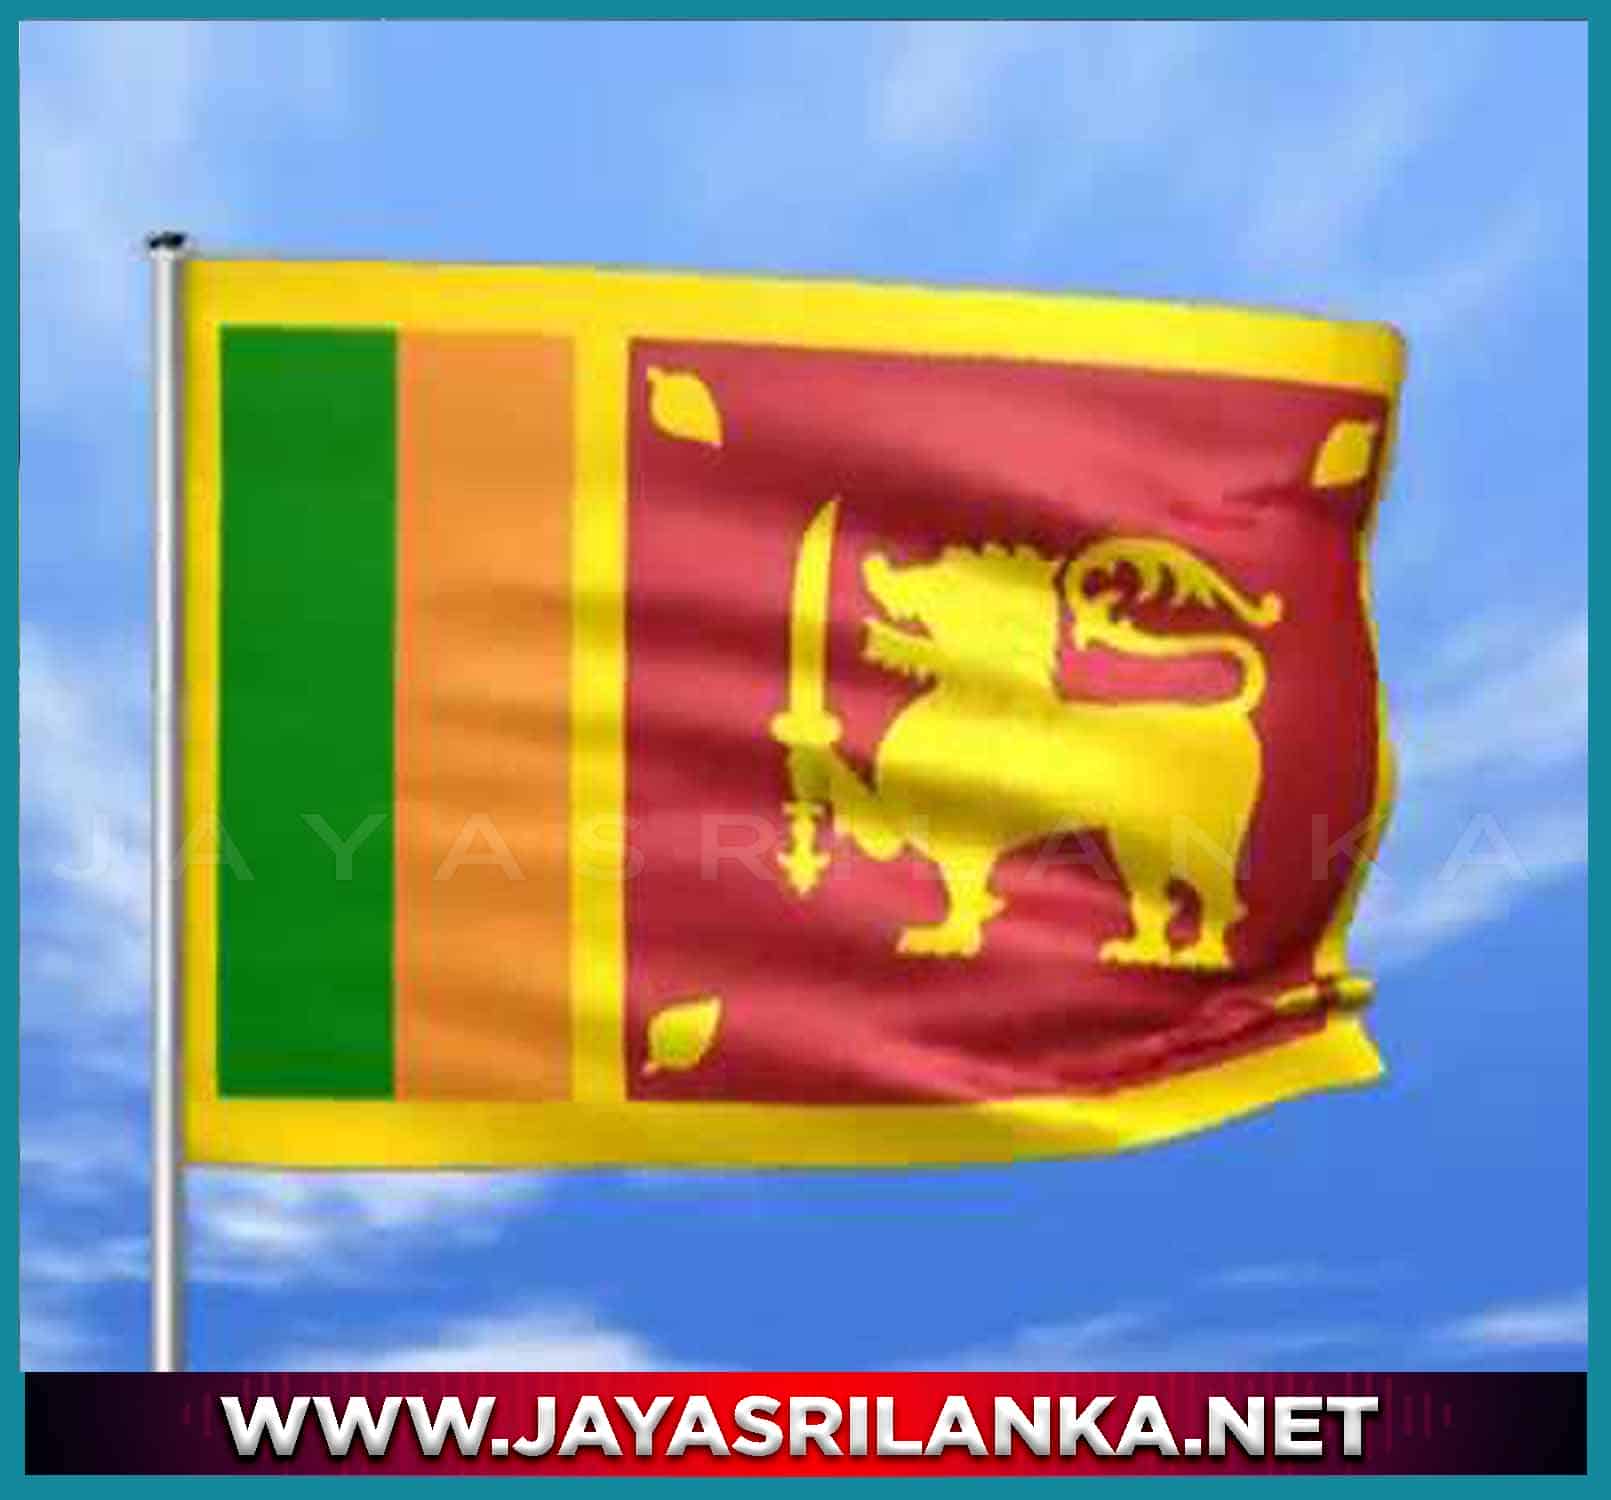 National Anthem of Sri Lanka (Sri Lanka Matha)